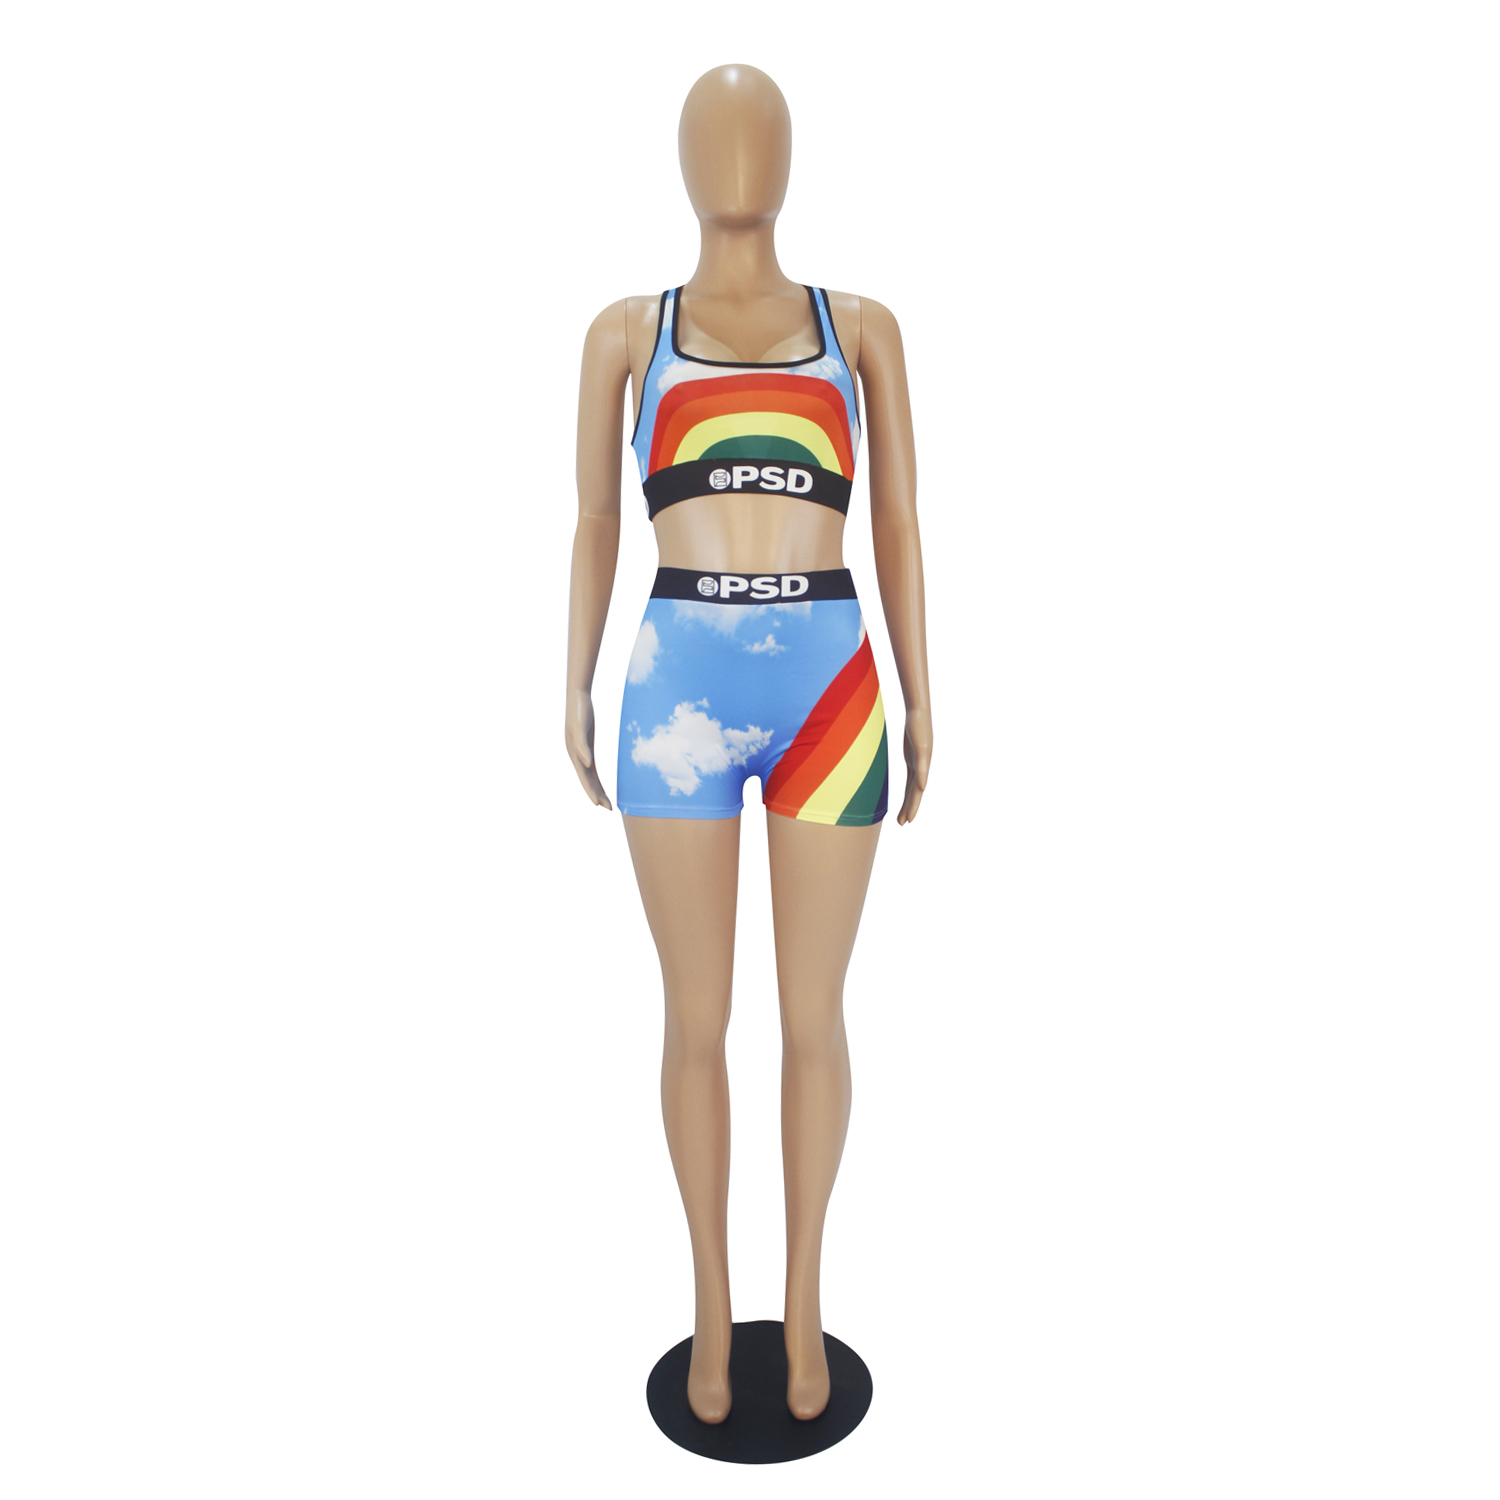 US$ 4.85 - Sexy printed tank top swimsuit suit - www.keke-lover.com